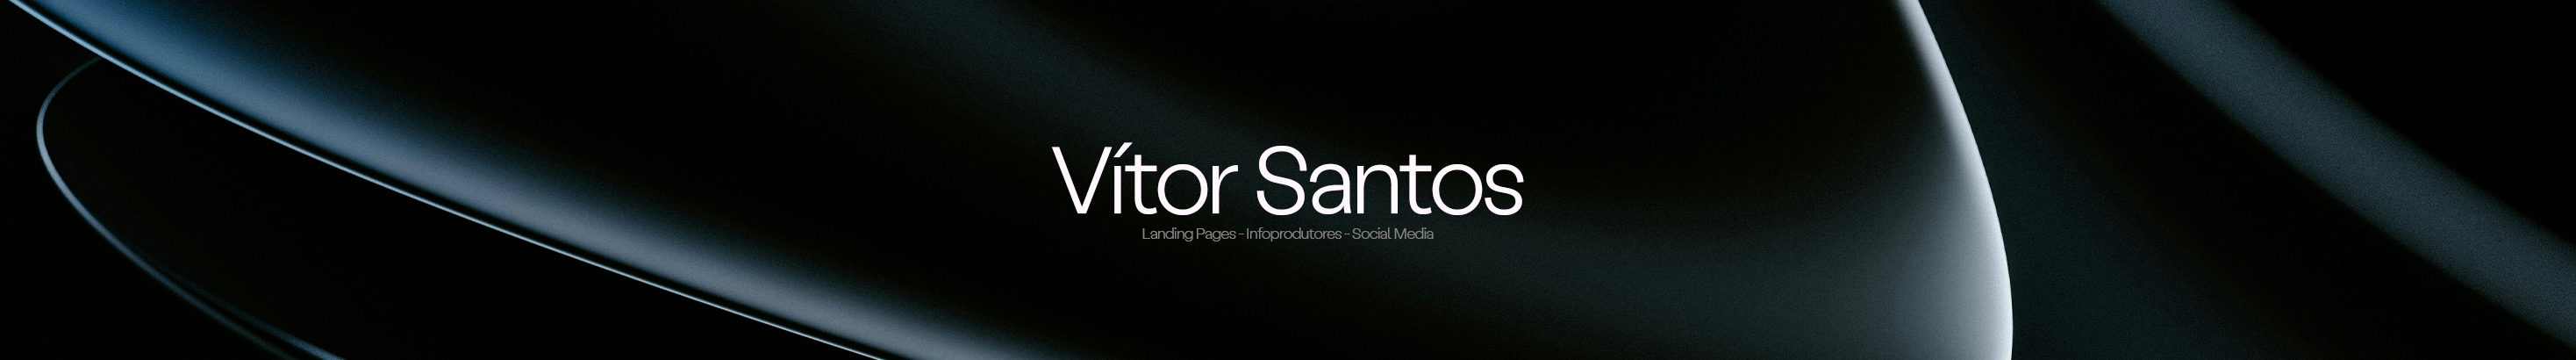 Vítor Santos's profile banner